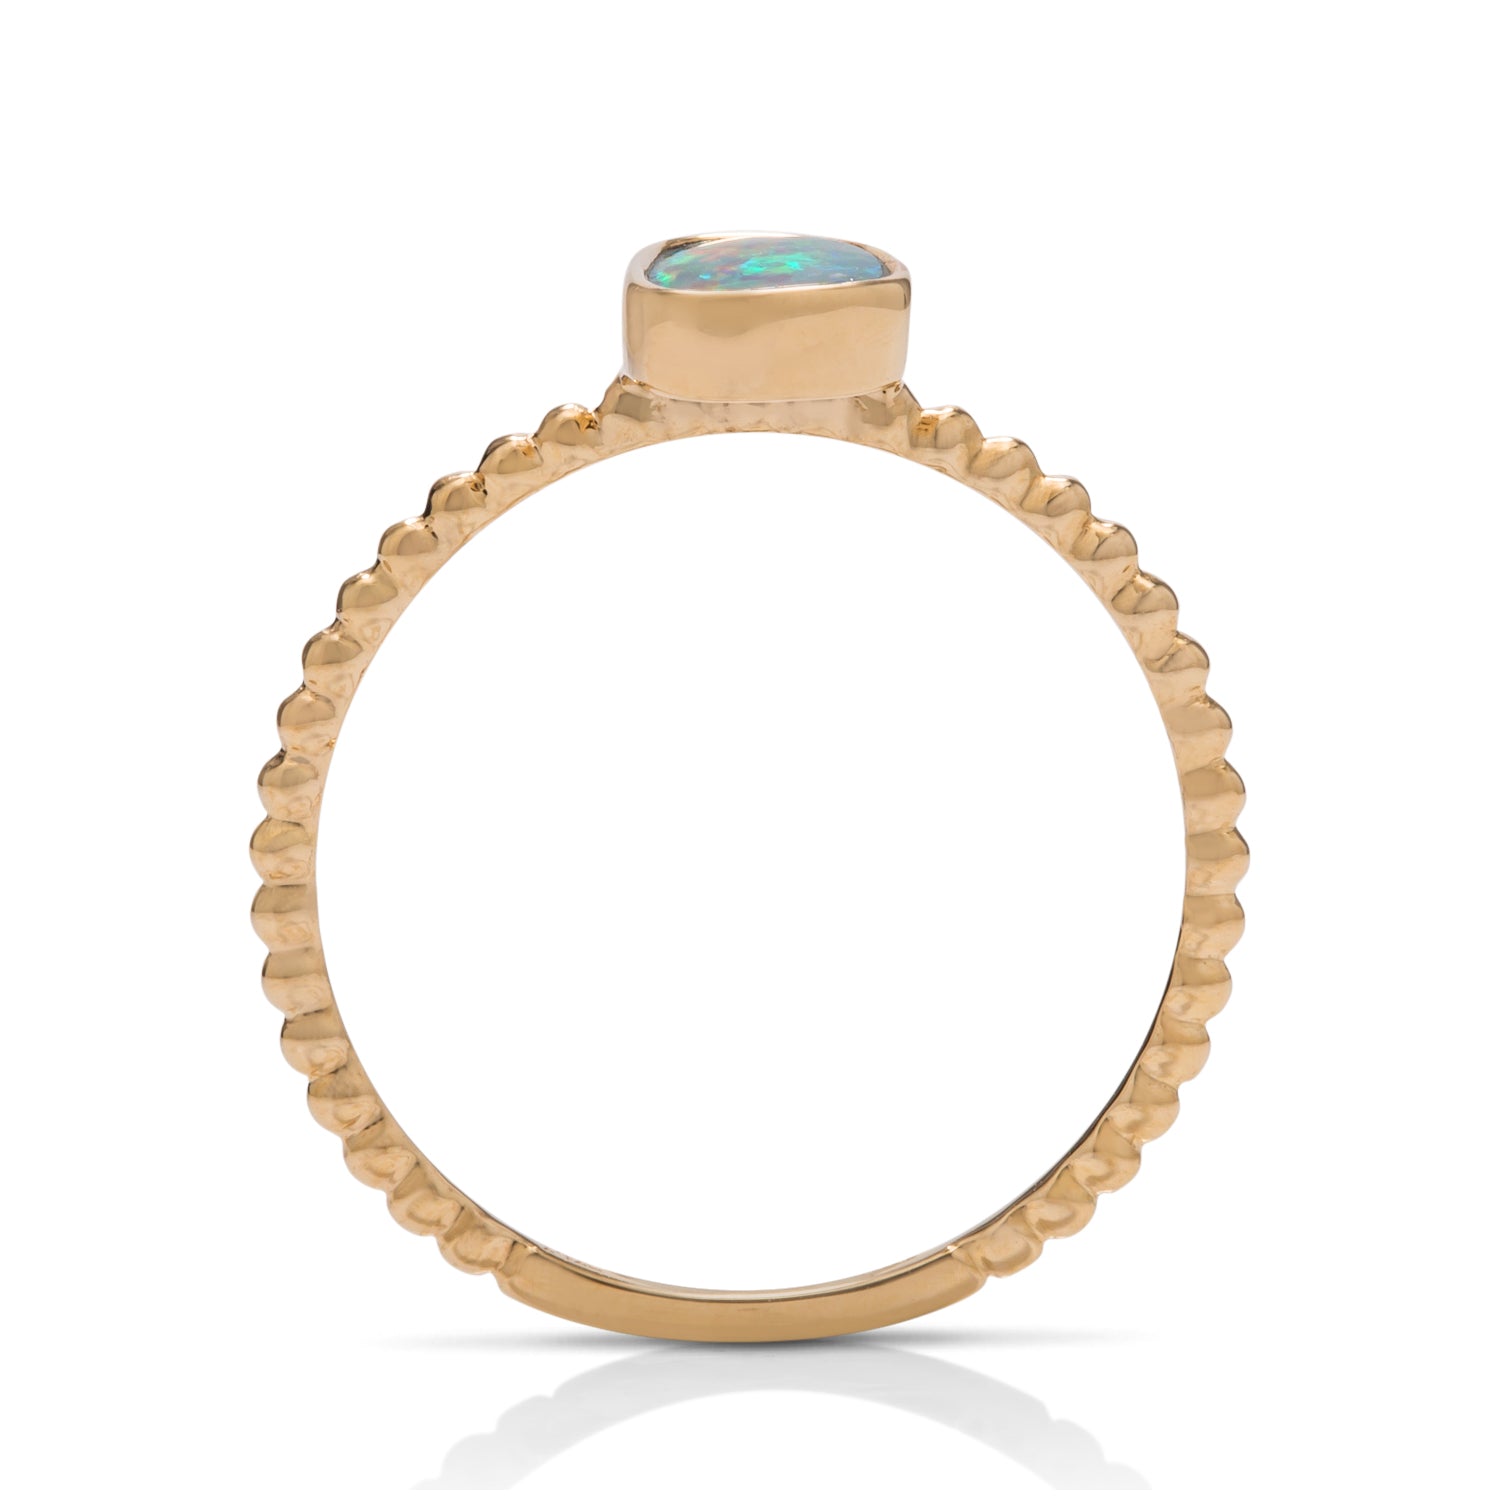 Australian Opal Beaded Ring - Charles Koll Jewellers